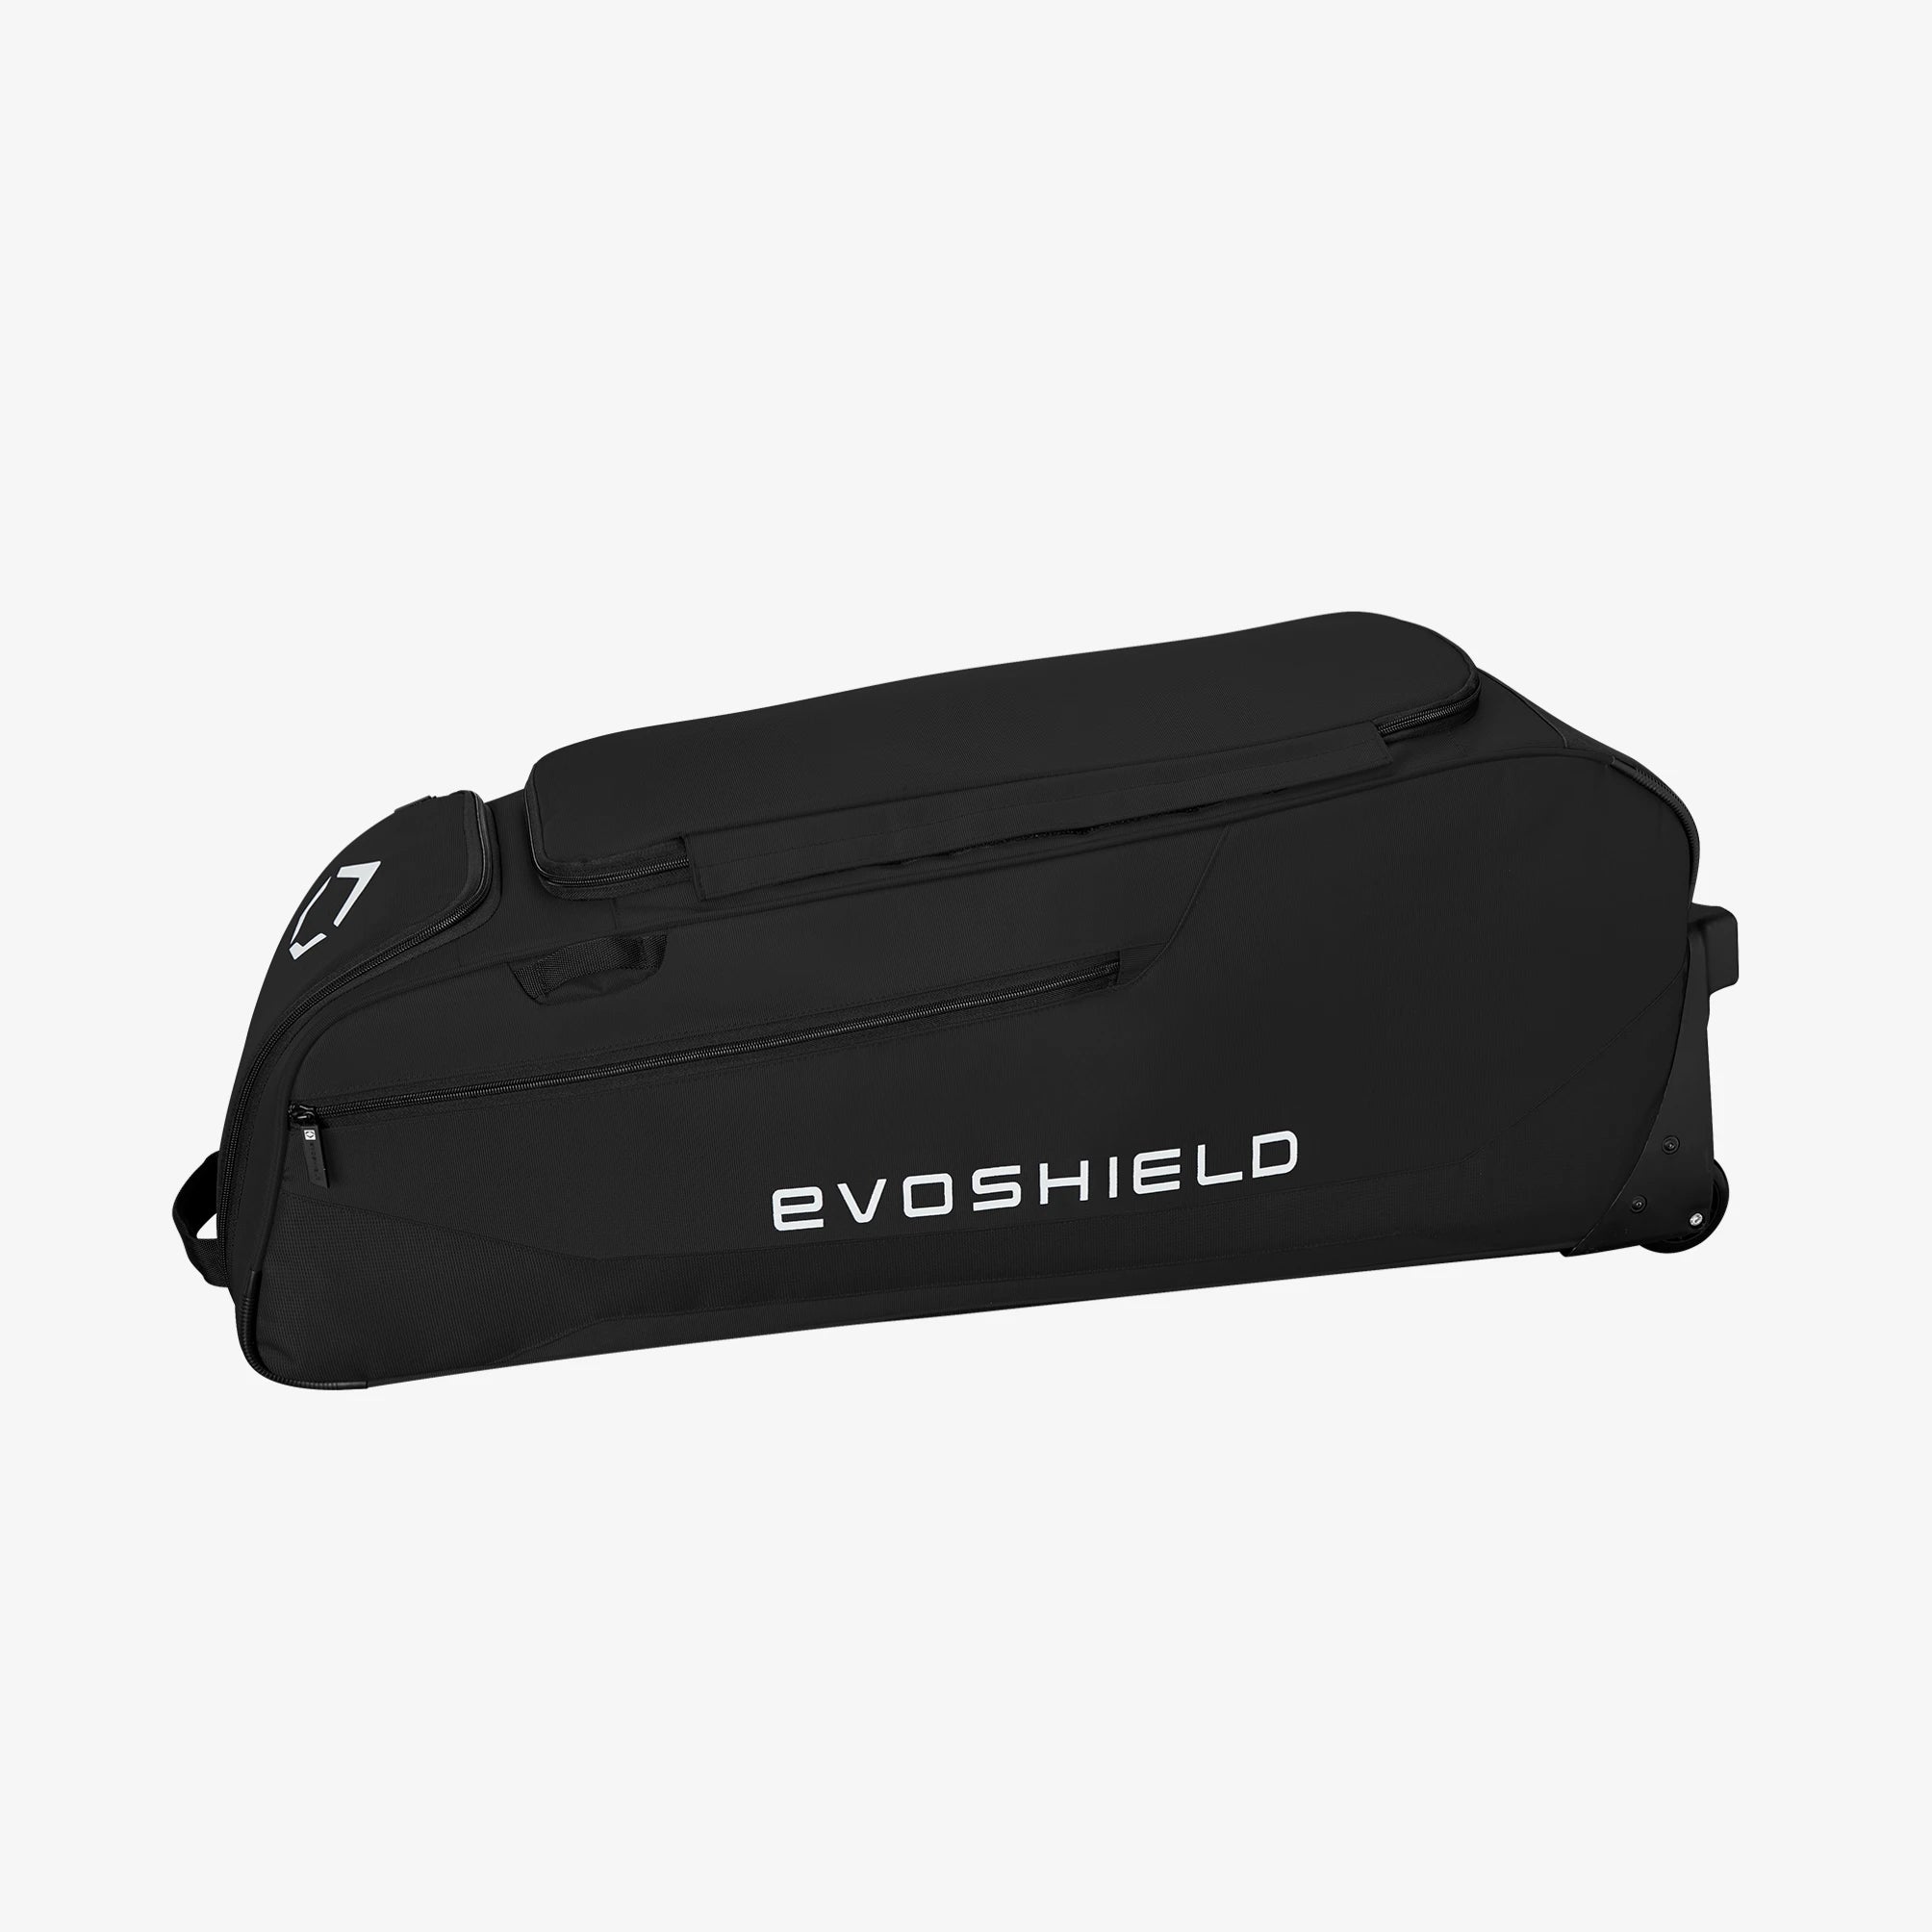 EVOSHIELD BLACK STANDOUT WHEELED BAG: WB5719101